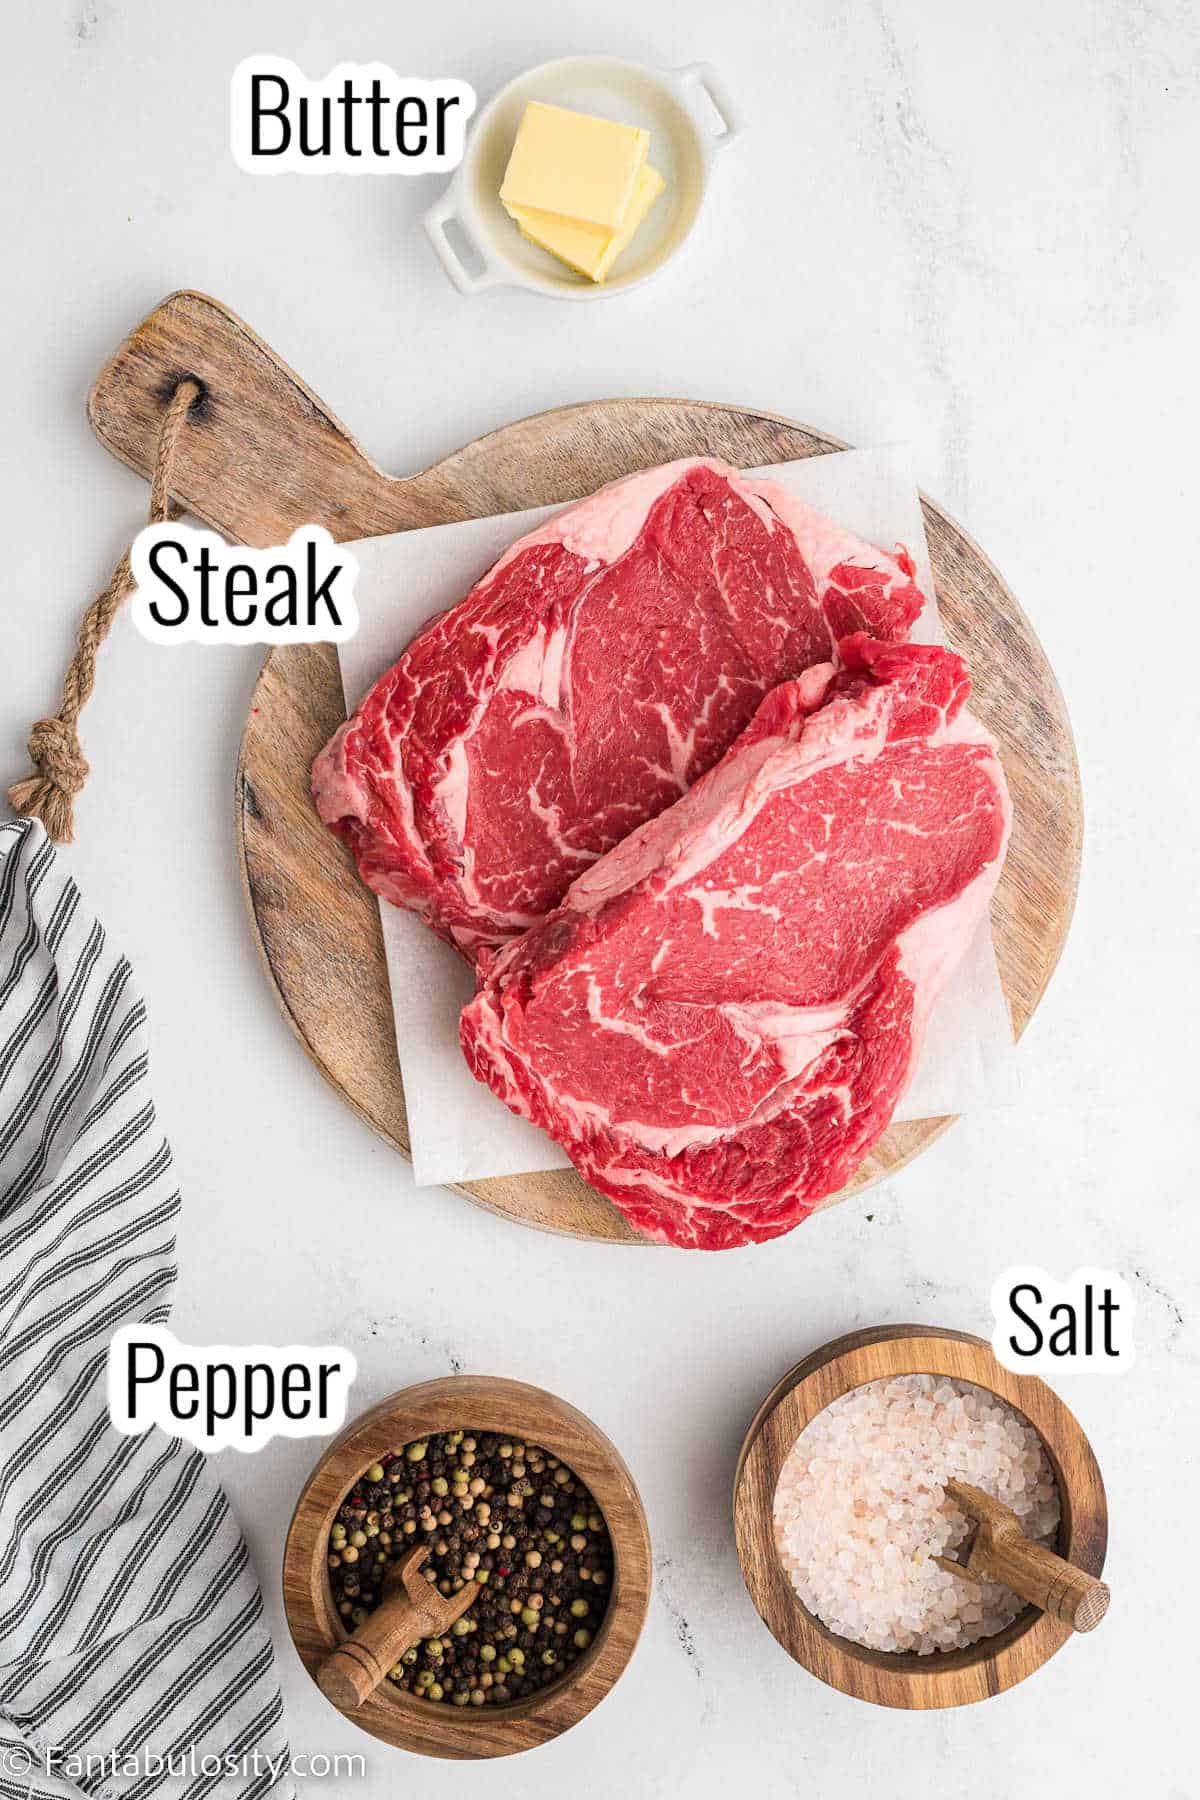 Ingredients for baked steak